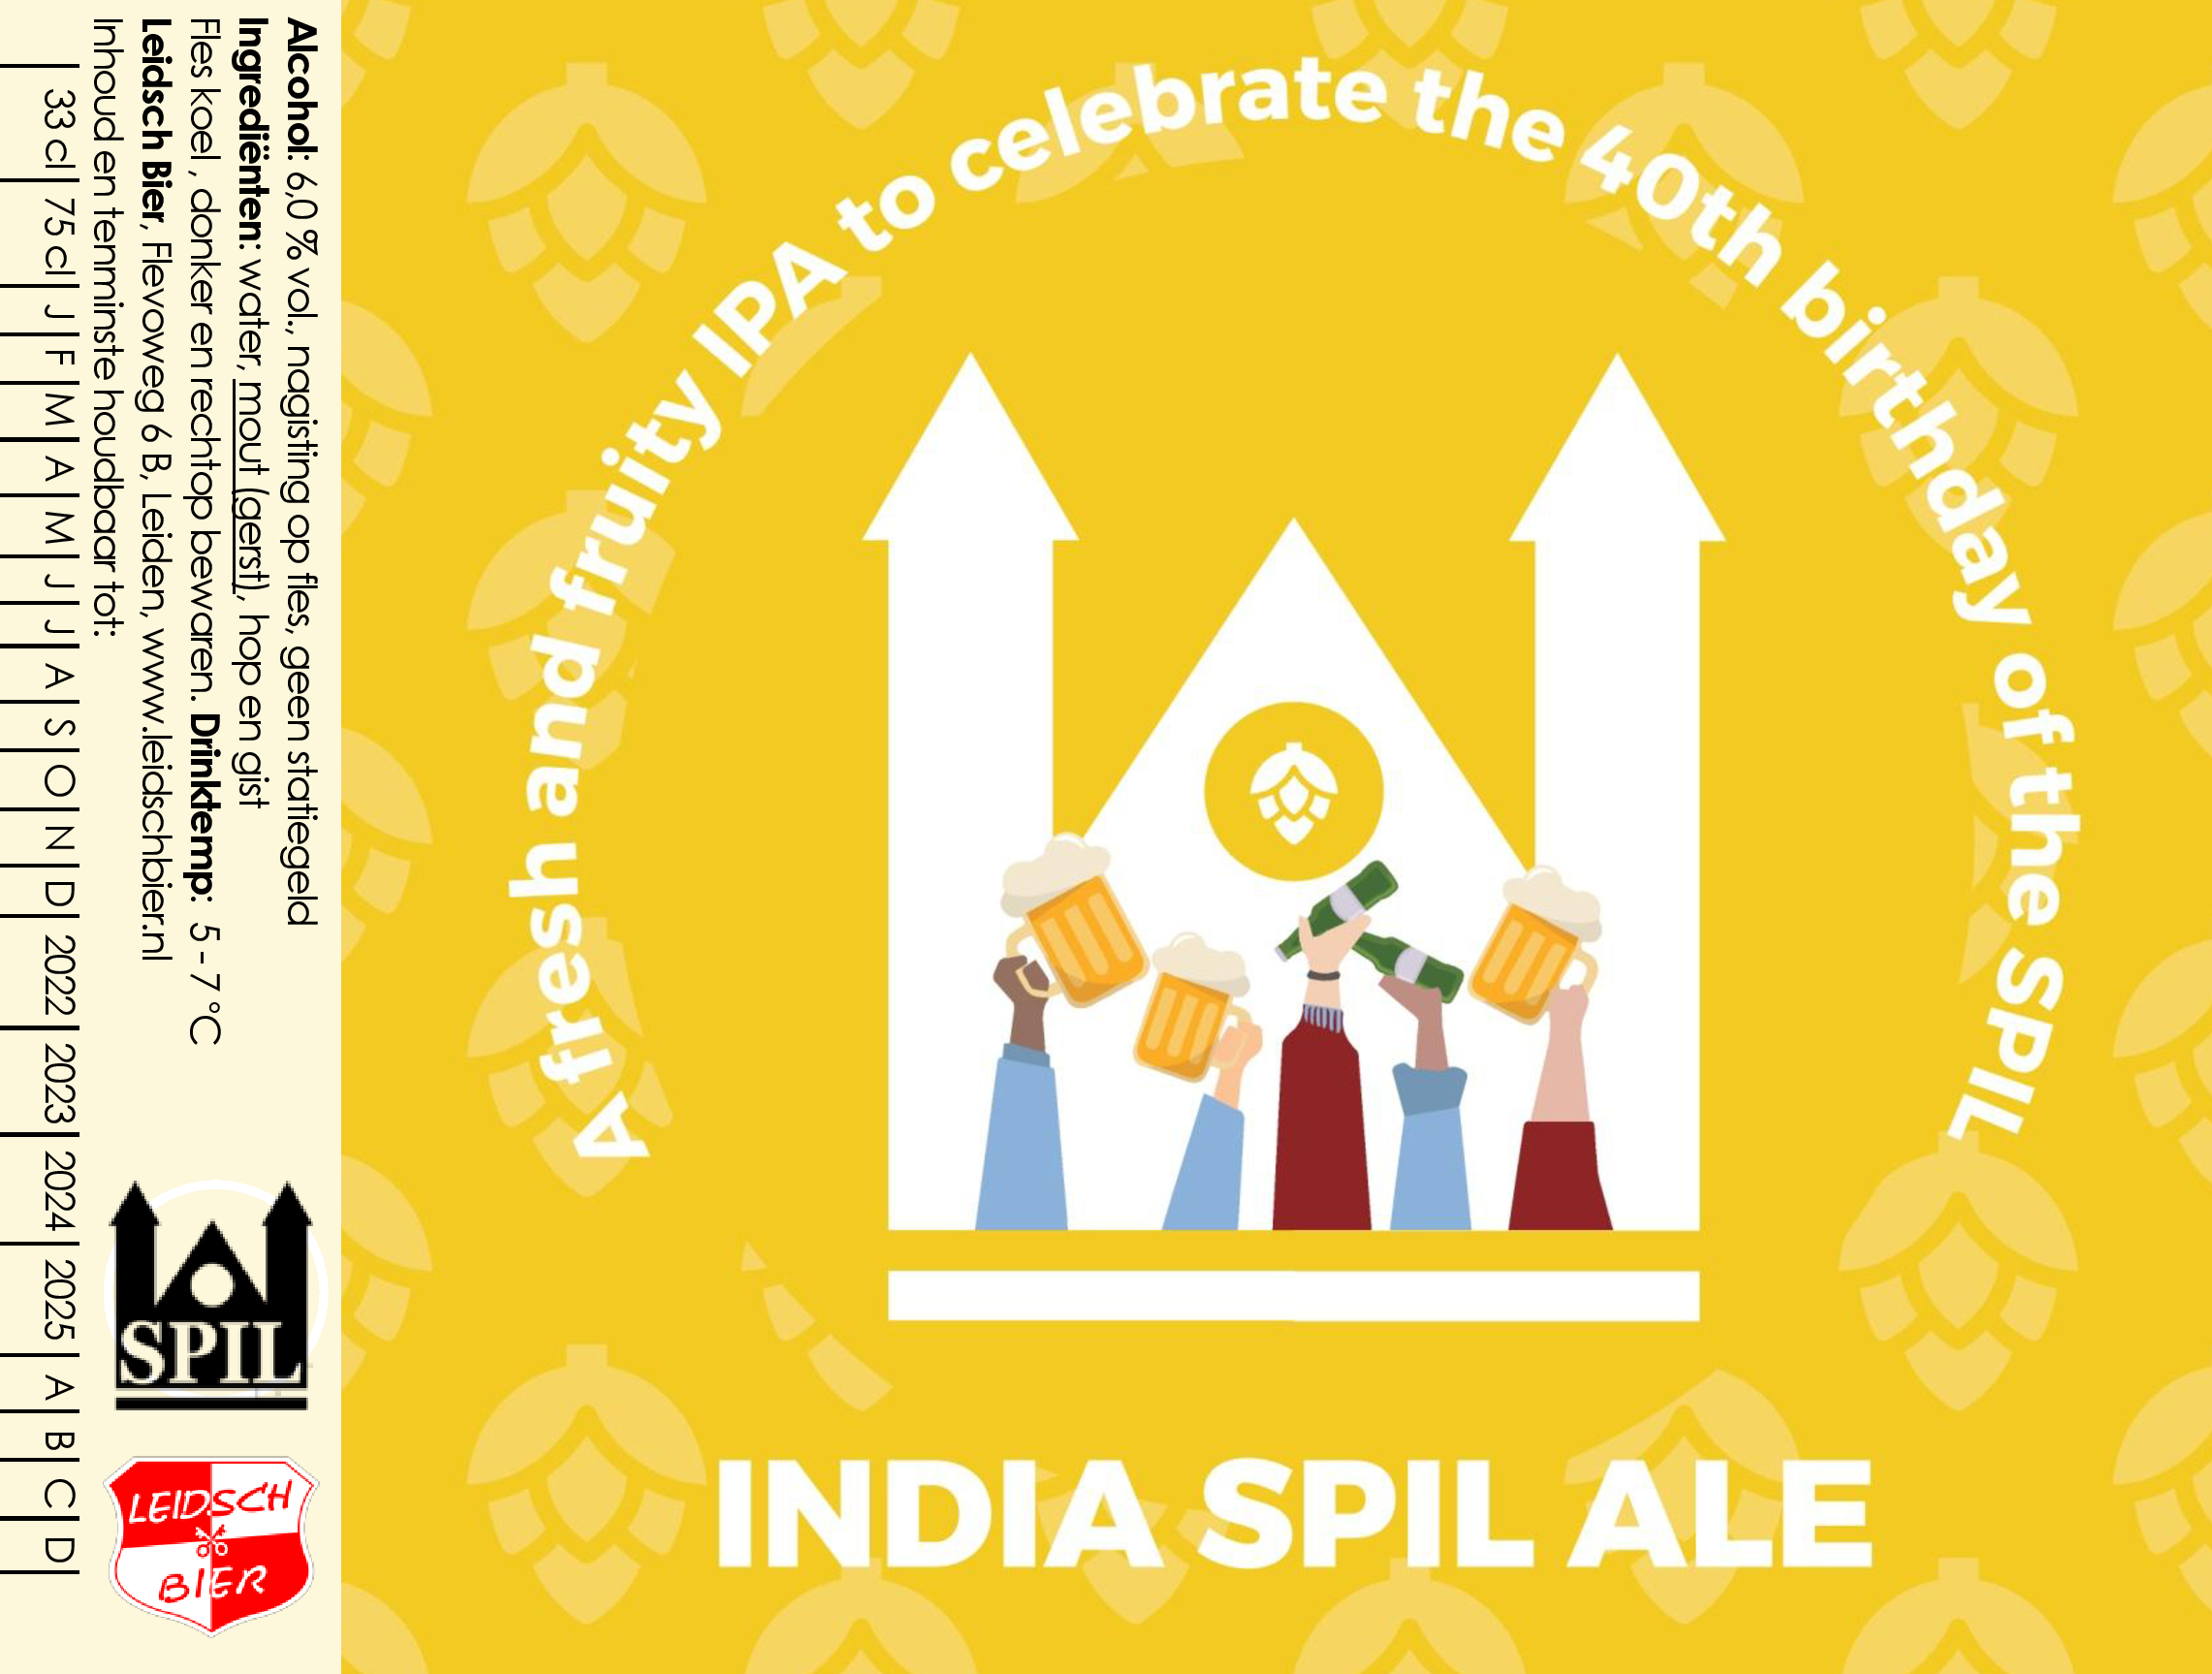 India SPIL Ale, etiket 2021